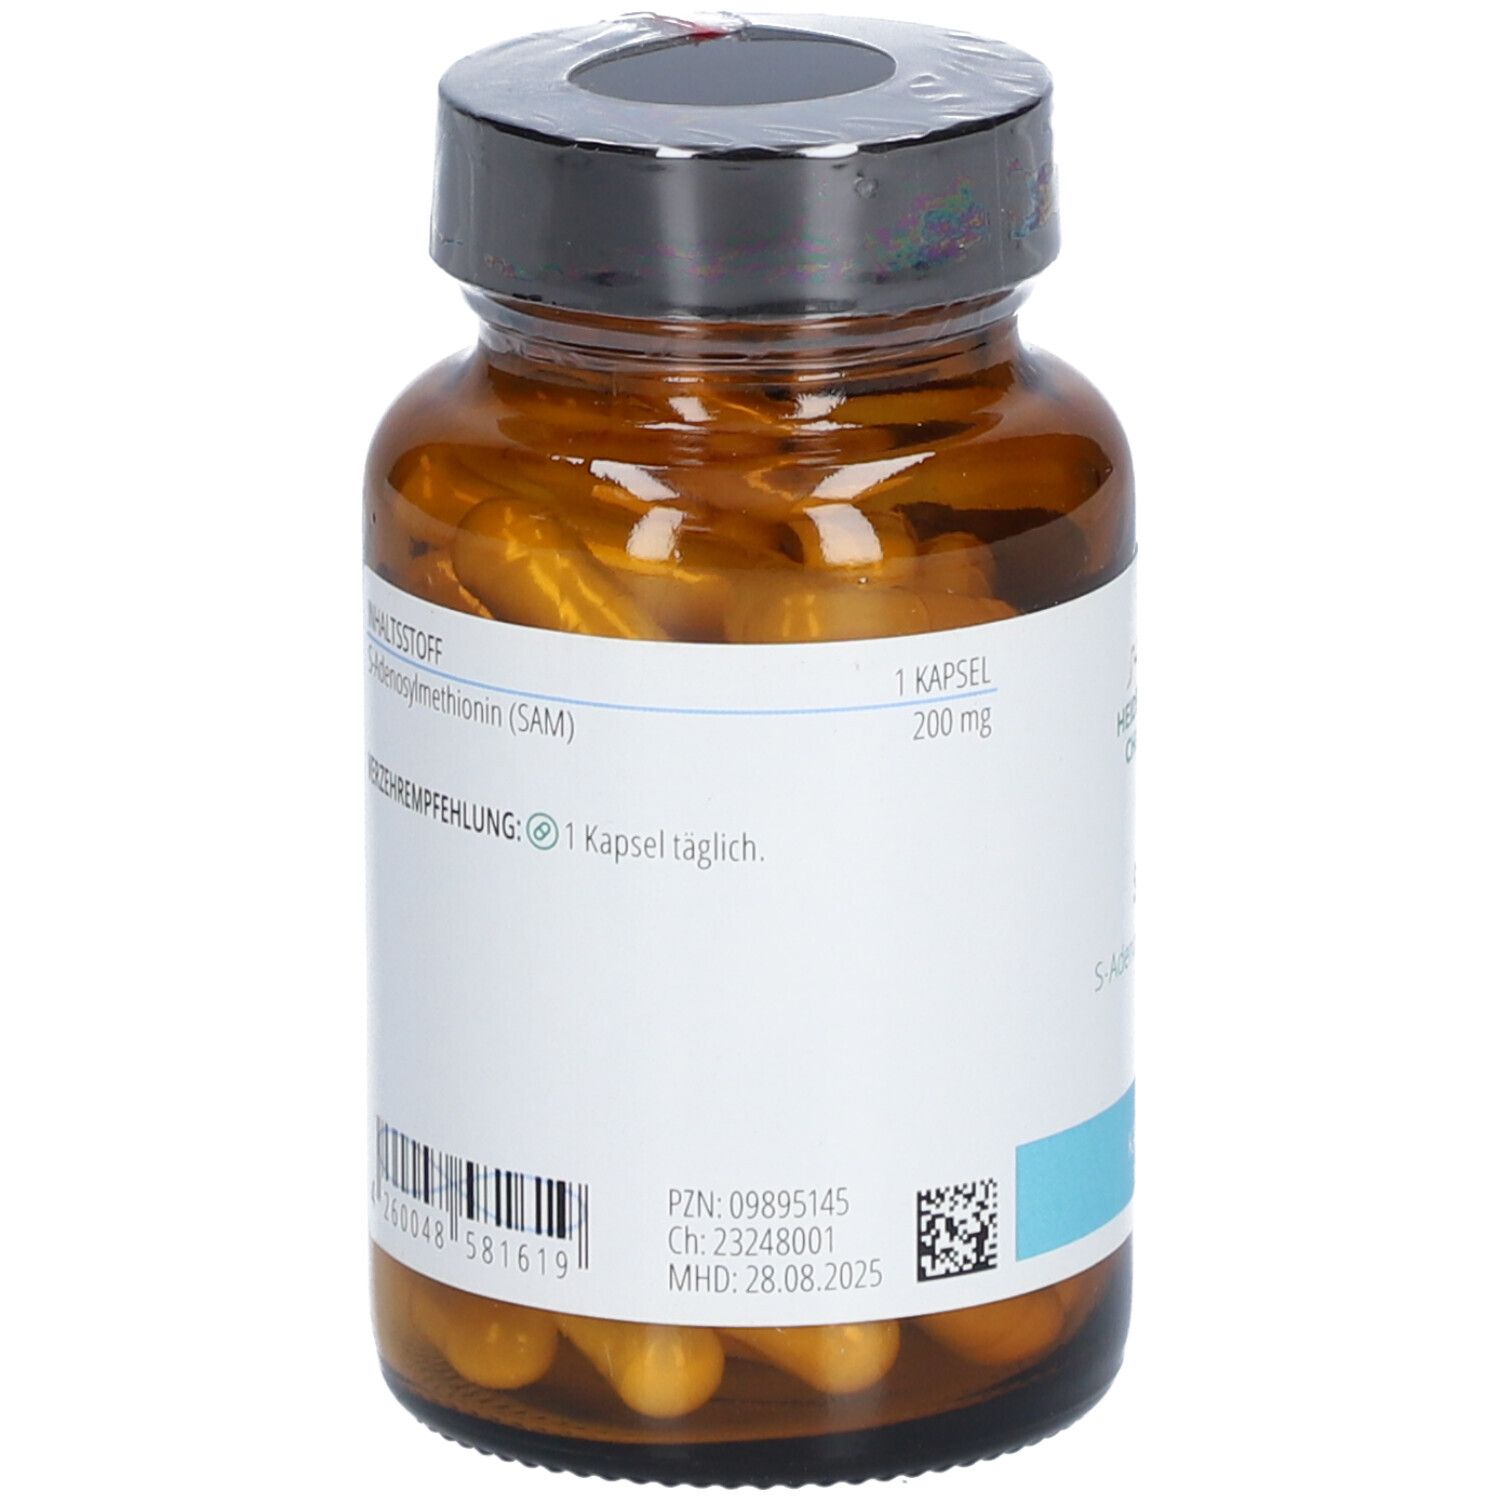 Heidelberger Chlorella® SAM (S-Adenosylmethionin)